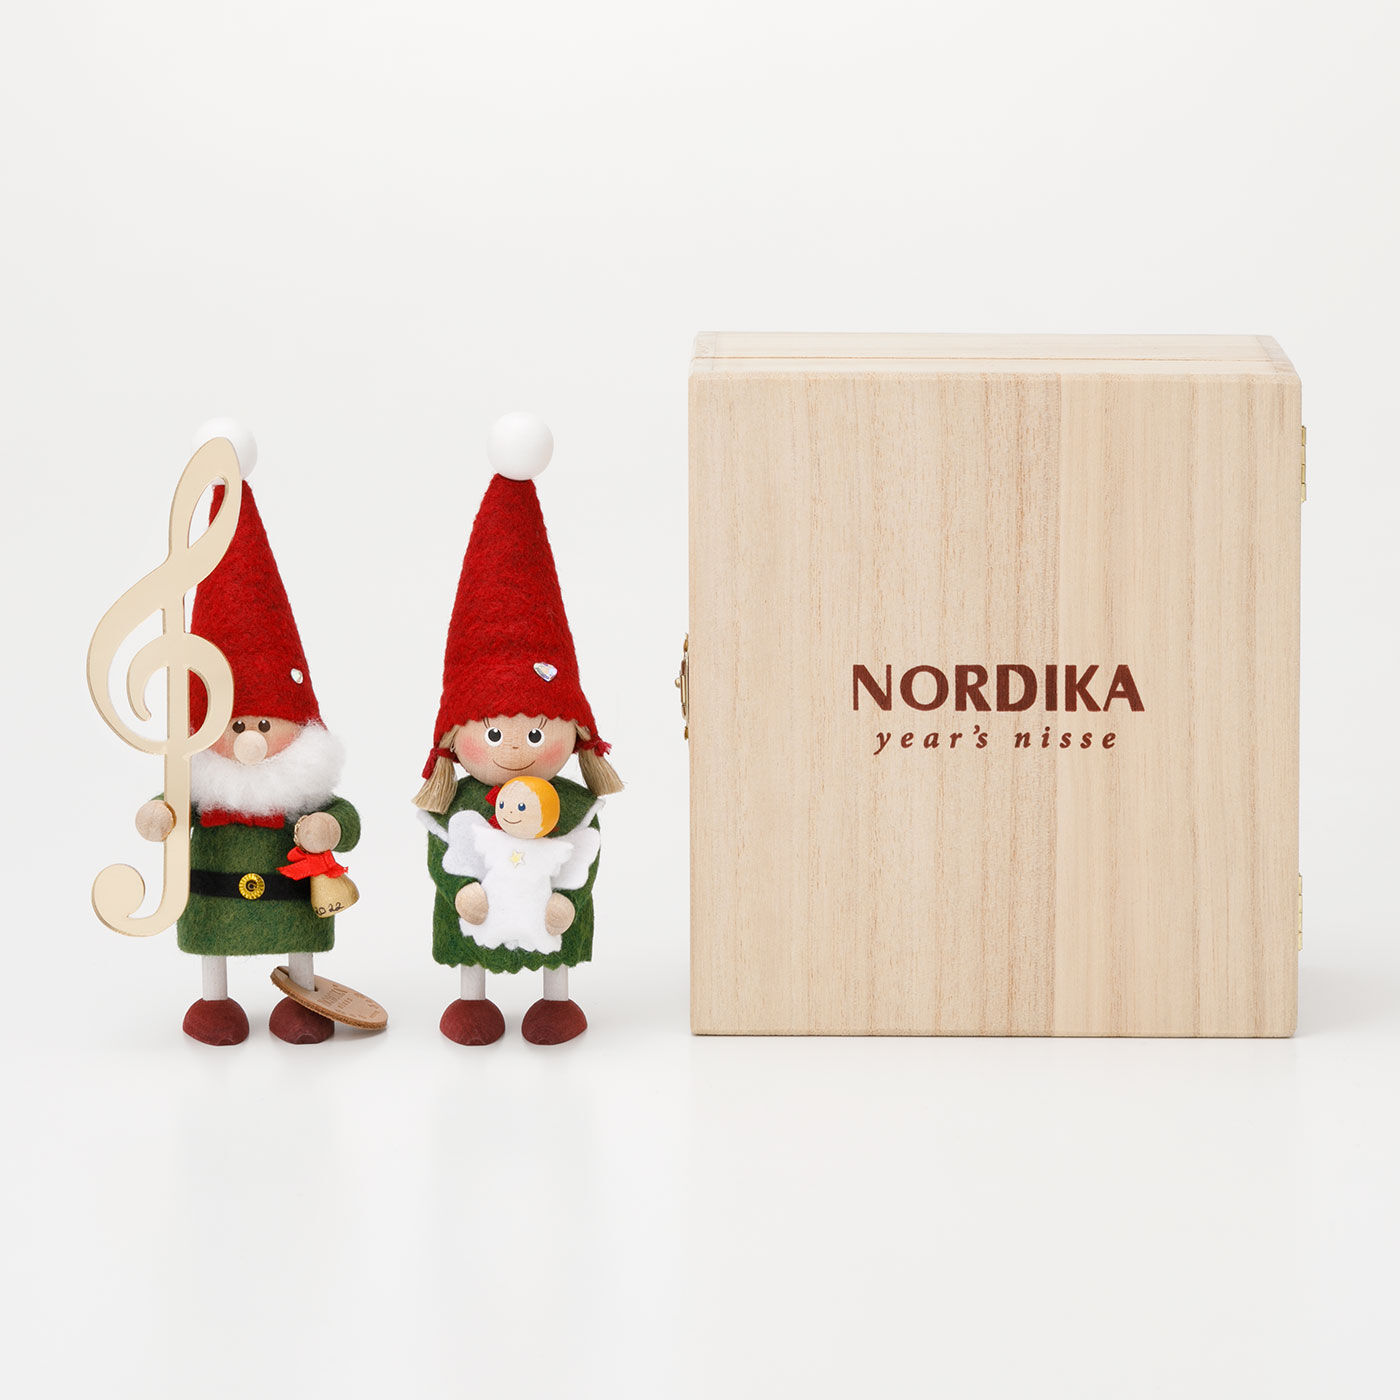 SeeMONO|ヨーロッパの職人が手作りした北欧の妖精〈イヤーズノルディカ２０２２〉／ノルディカニッセ|専用ボックス付きです。